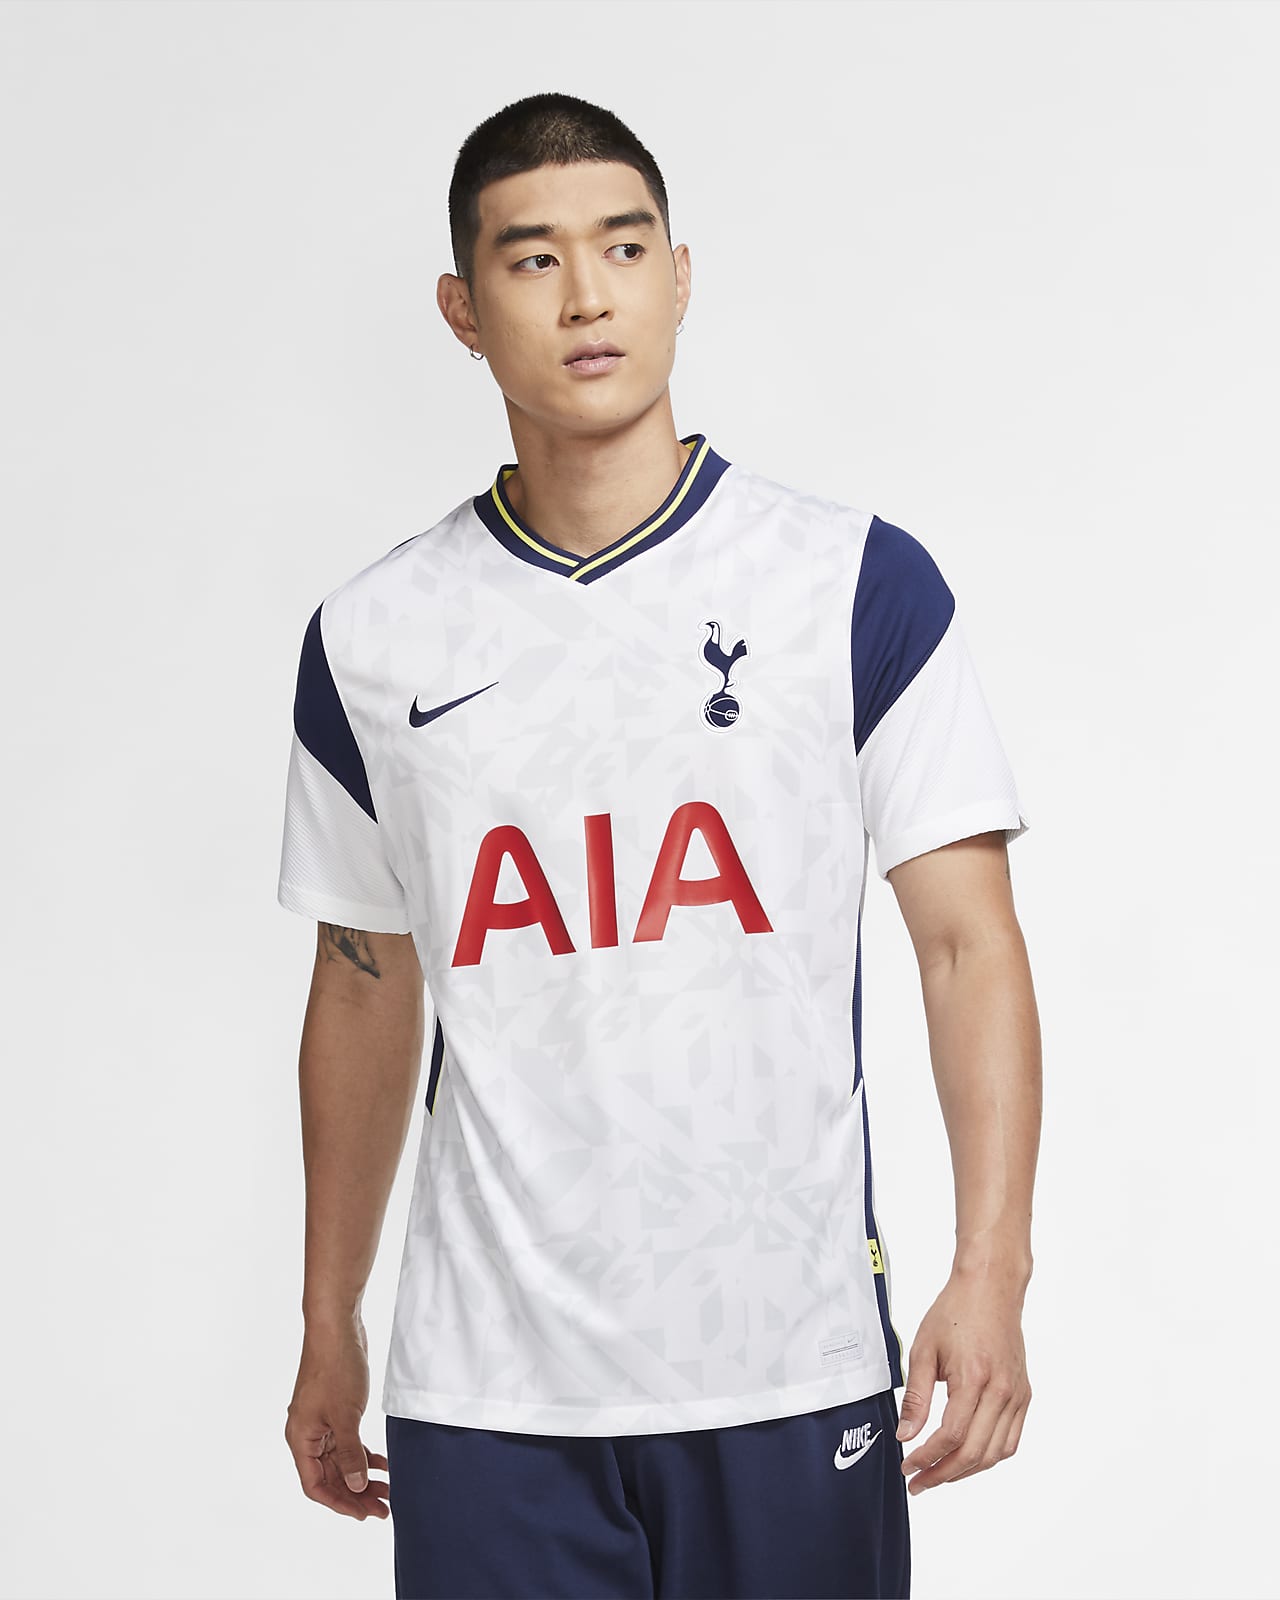 Camiseta de fútbol de local para hombre Stadium del Tottenham Hotspur 2020/21.  Nike.com